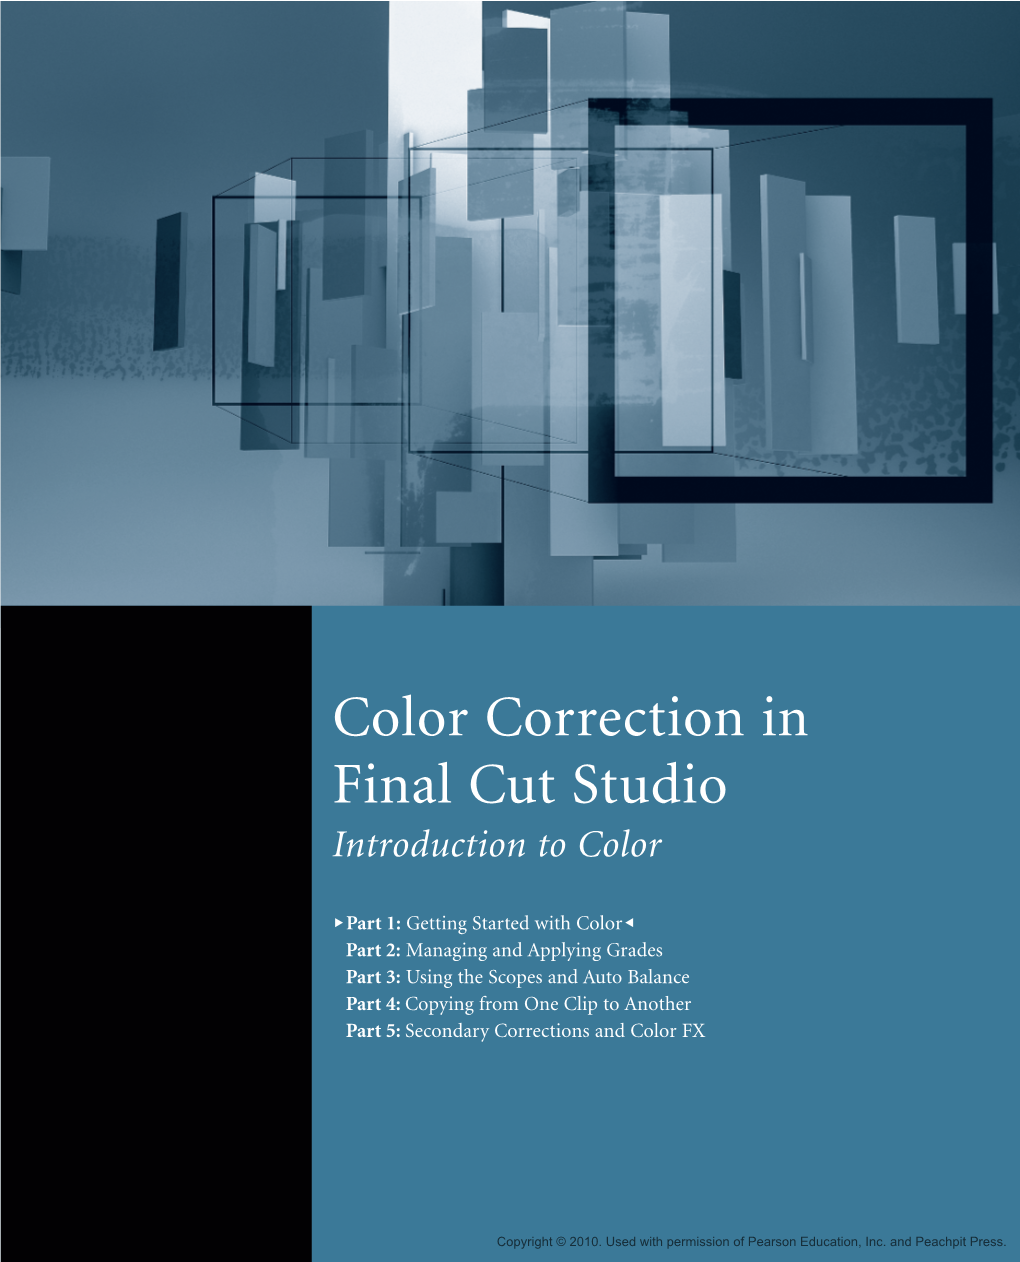 Color Correction in Final Cut Studio